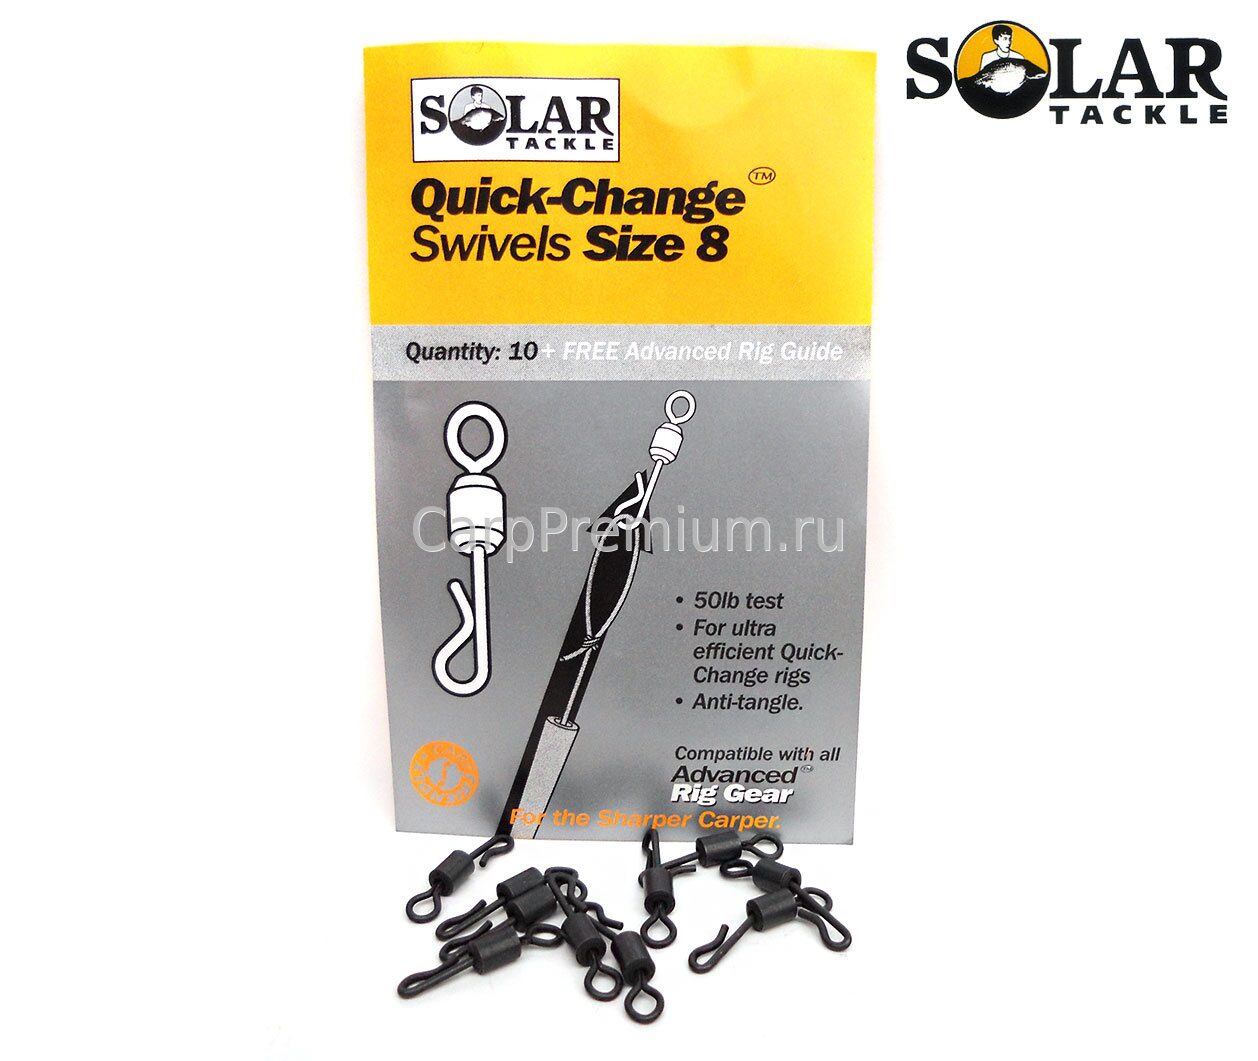 Верллюжок с быстросъемом Solar (Солар) - Quick Change Swivels, Размер 8, 10 шт